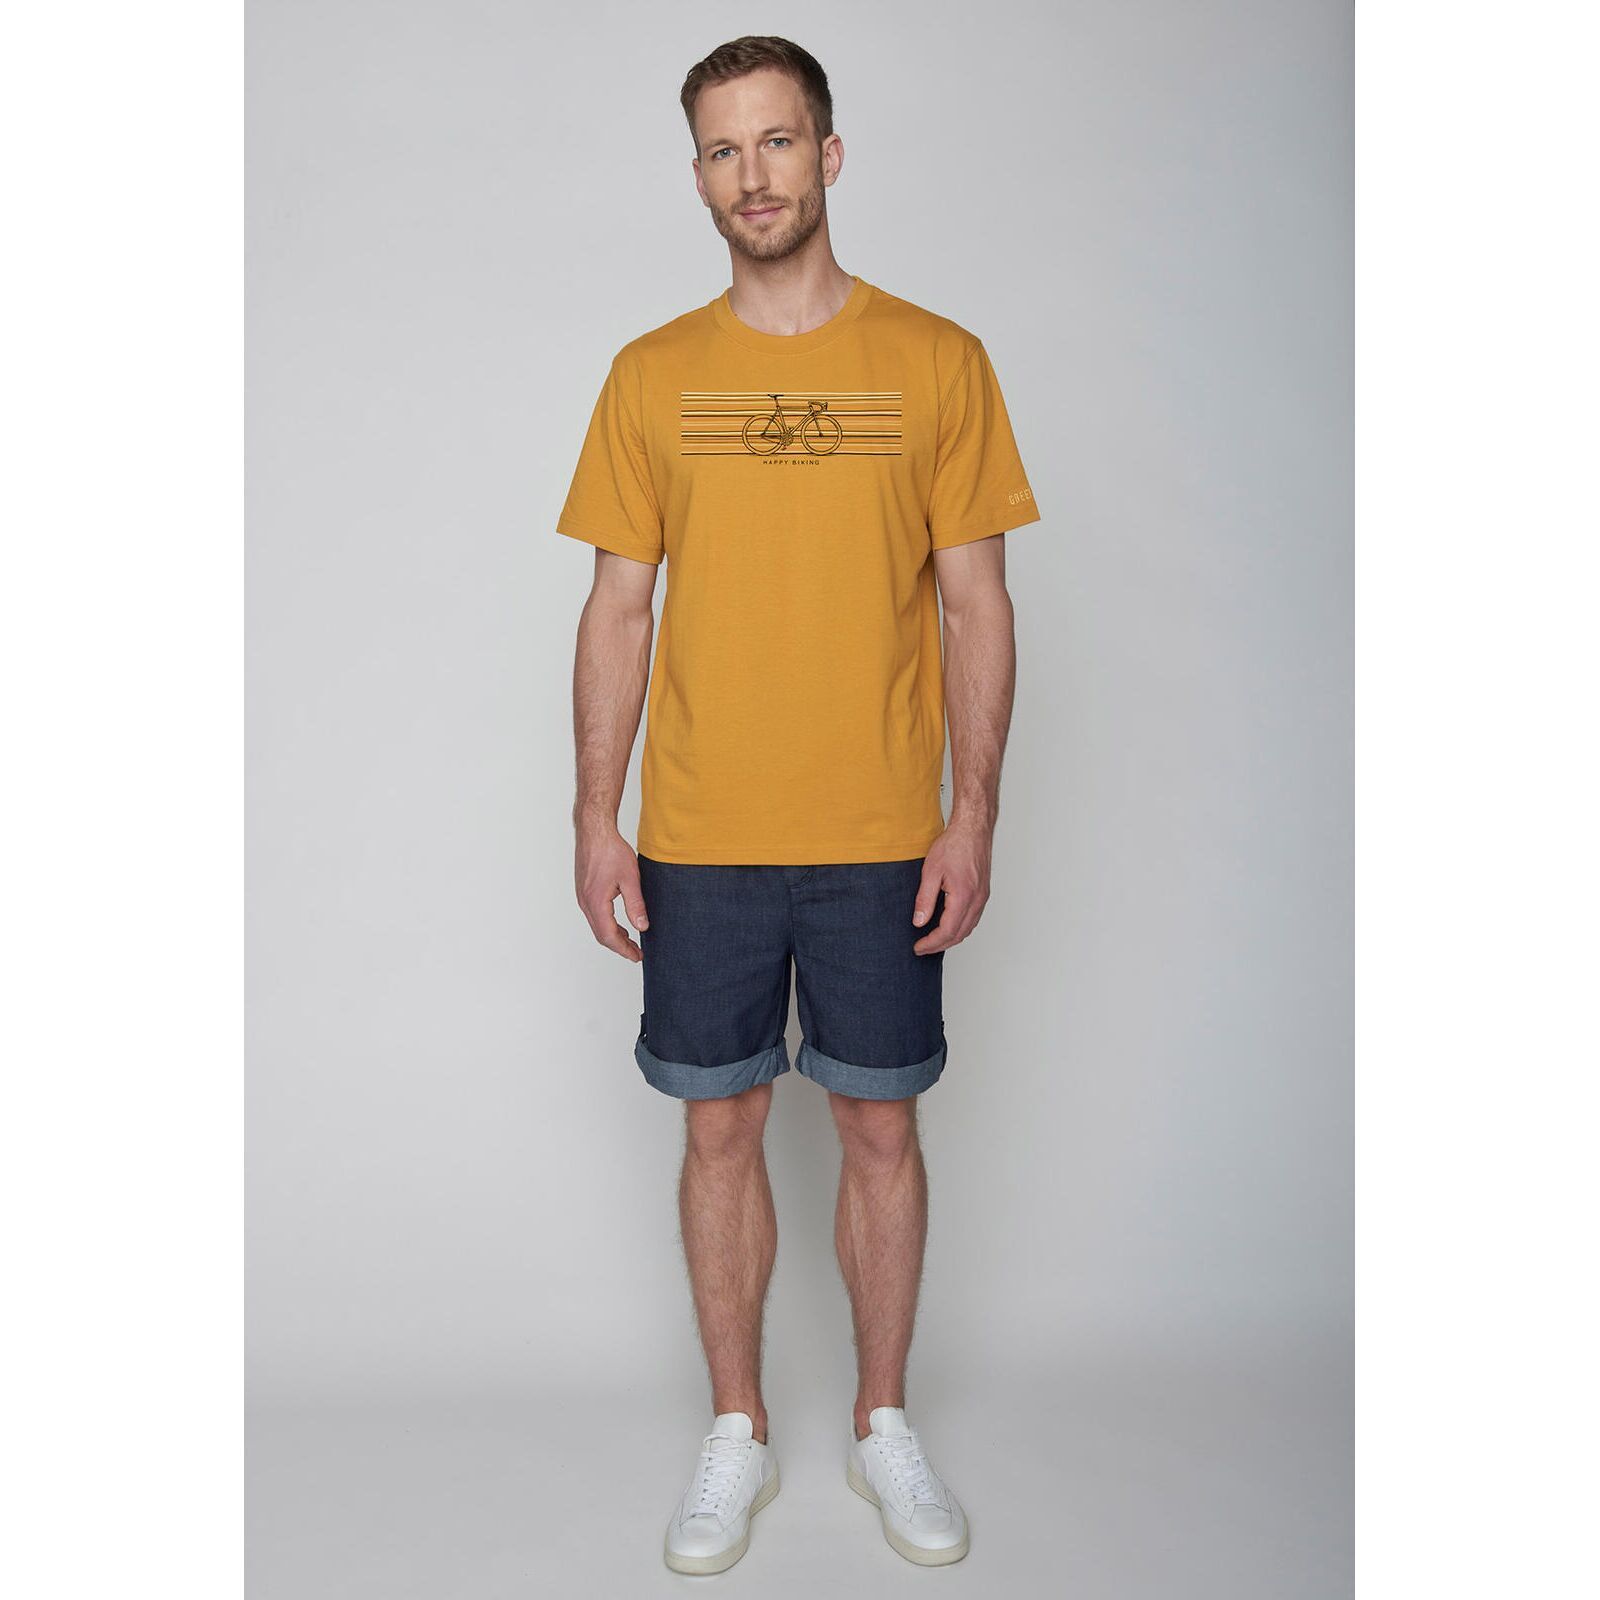 GREENBOMB Herren T-Shirt BIKE HAPPY Fusion ochre